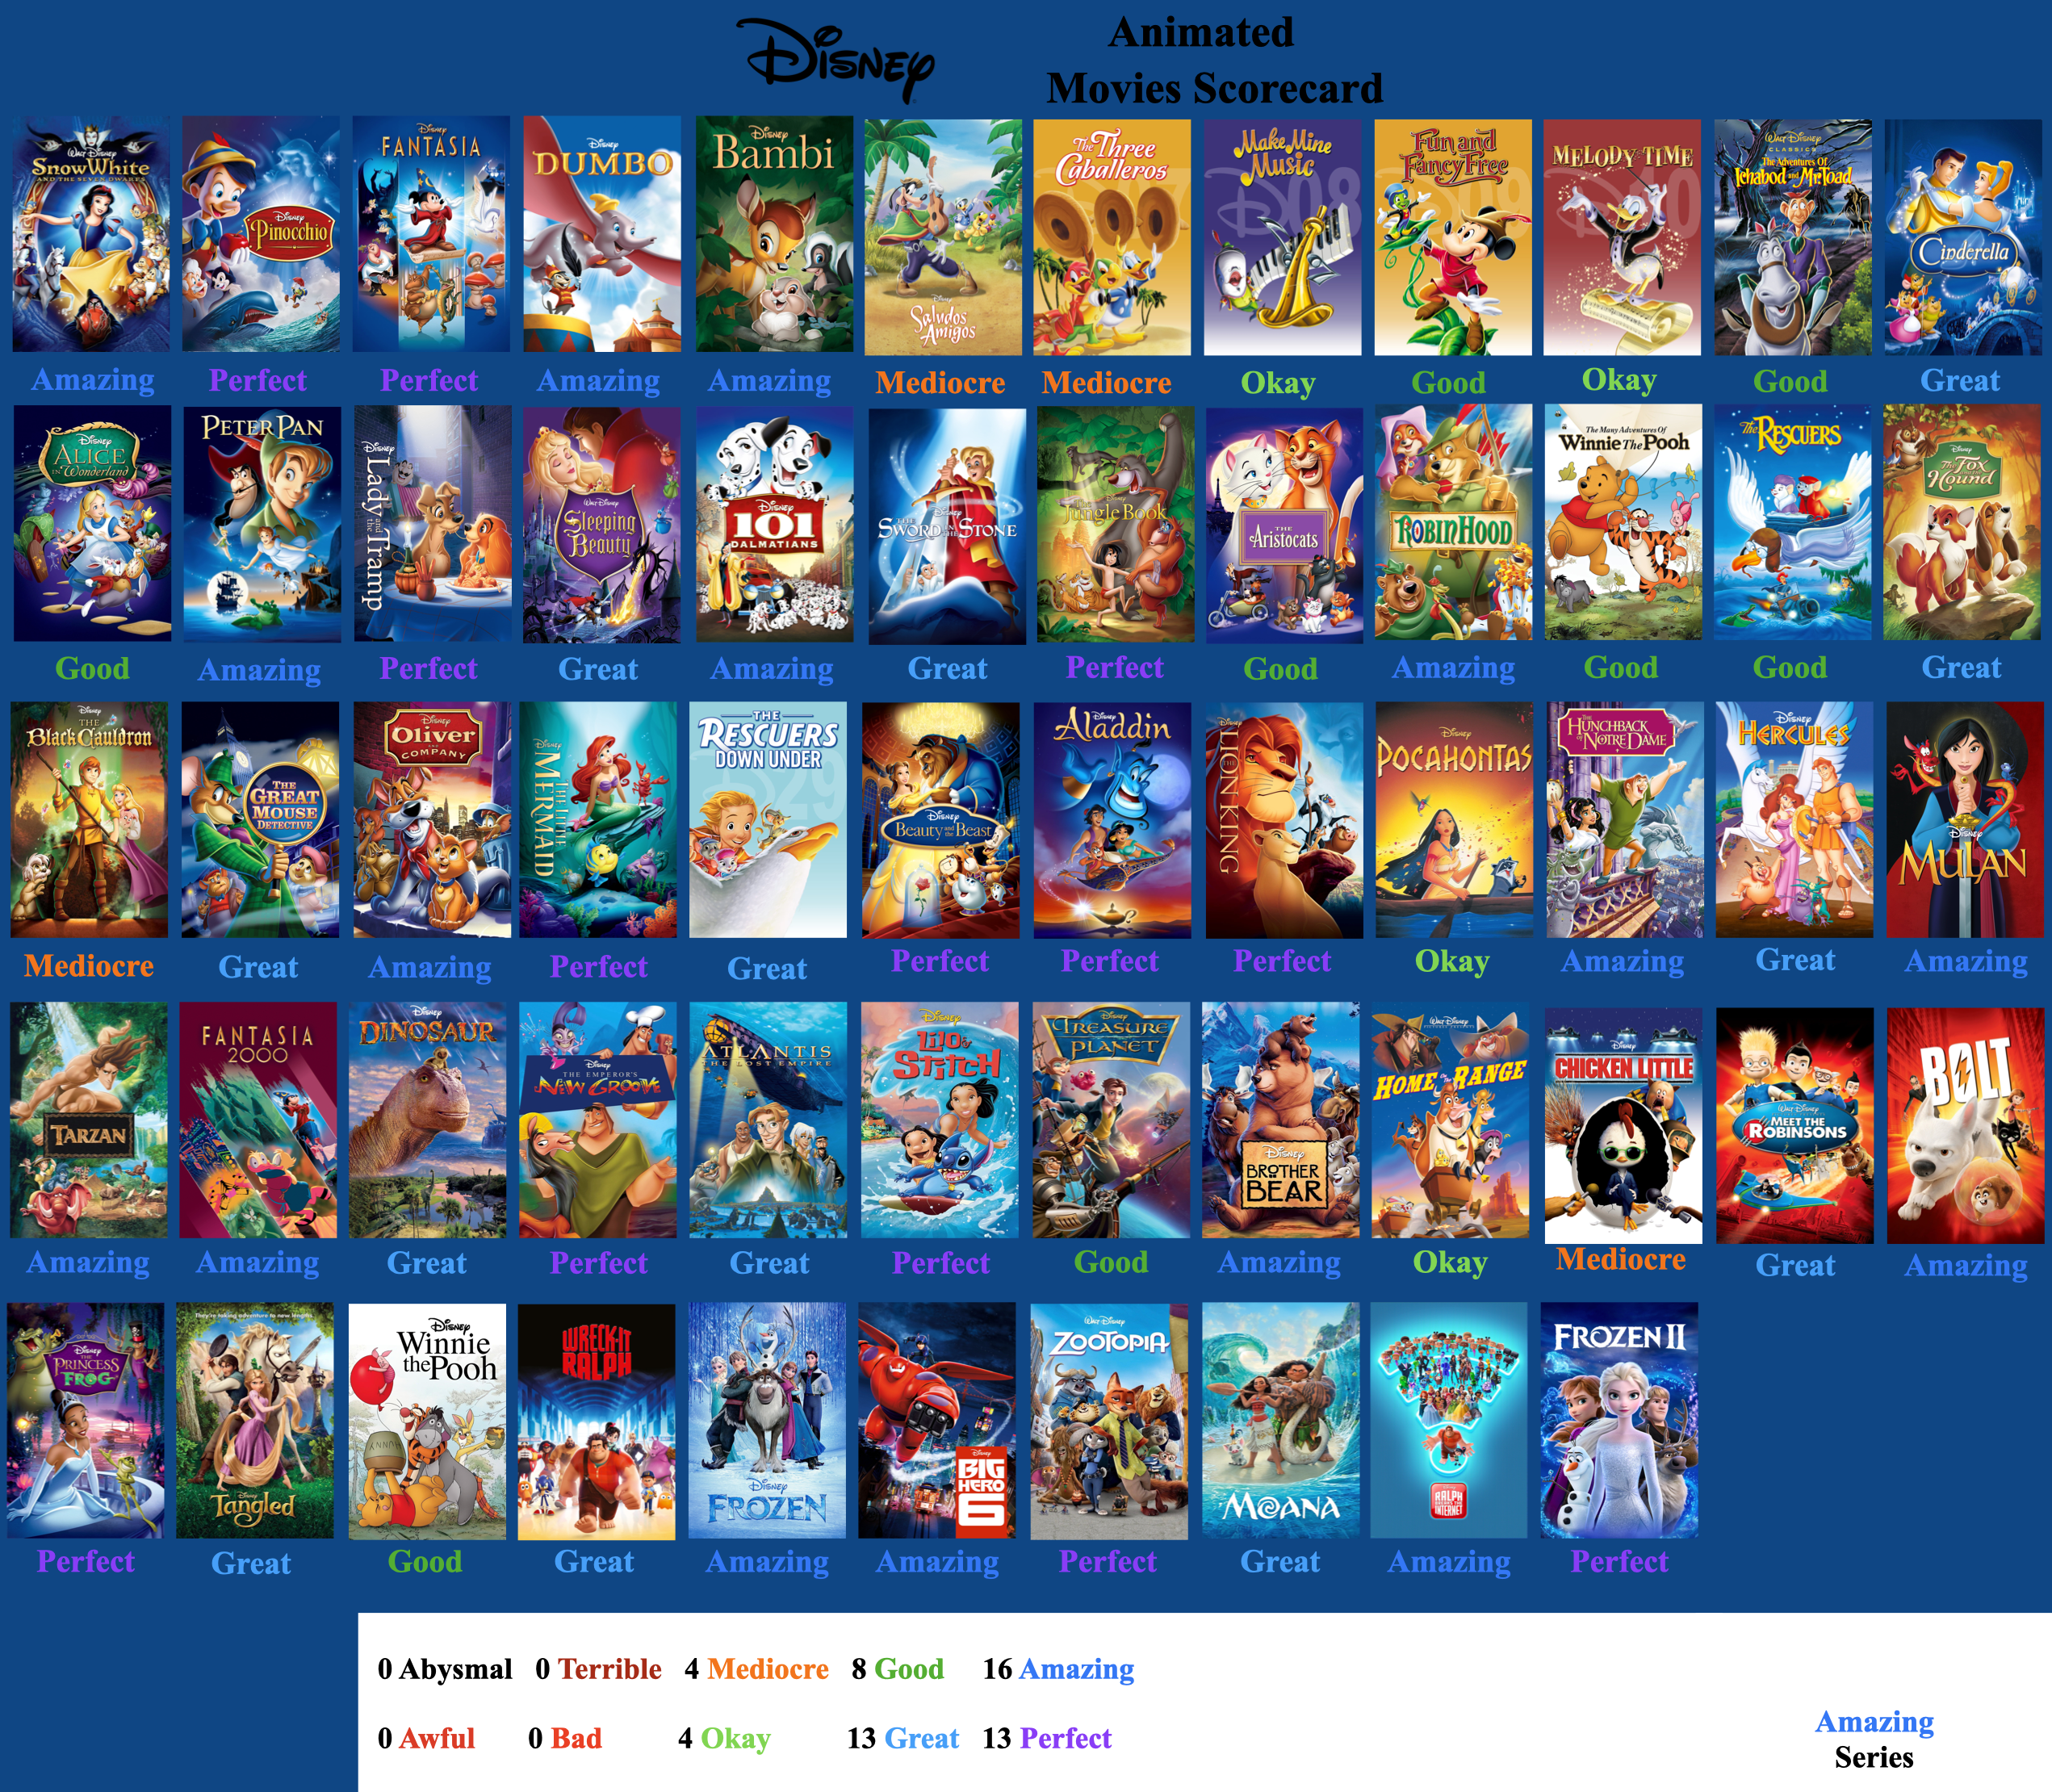 Disney Animated Movies Scorecard by Anthforde98 on DeviantArt